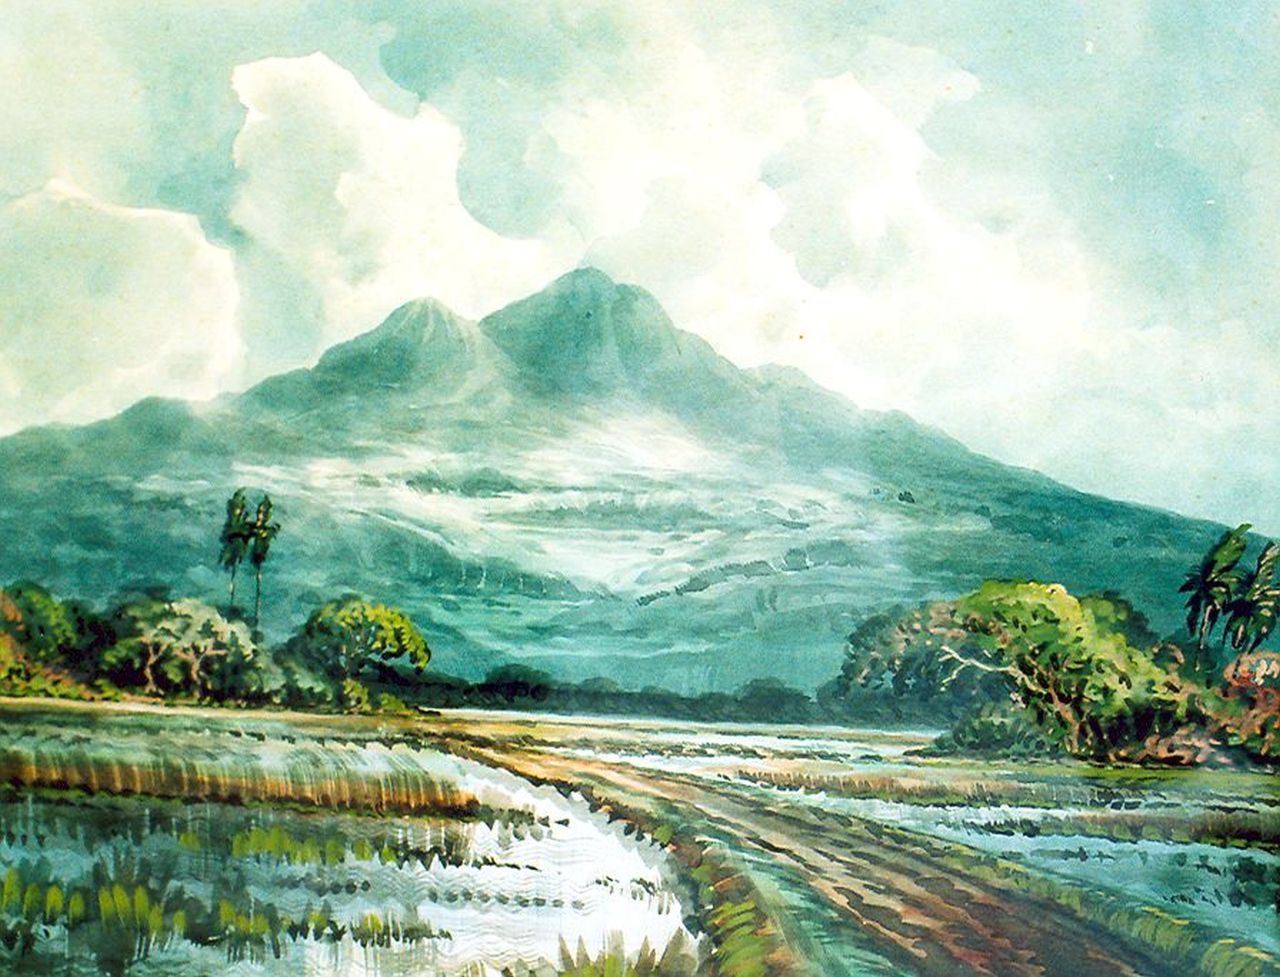 Widjaja A.K.  | Anton Kustia Widjaja, Sawa's in Indonesië, aquarel op papier 23,0 x 30,0 cm, gesigneerd rechtsonder